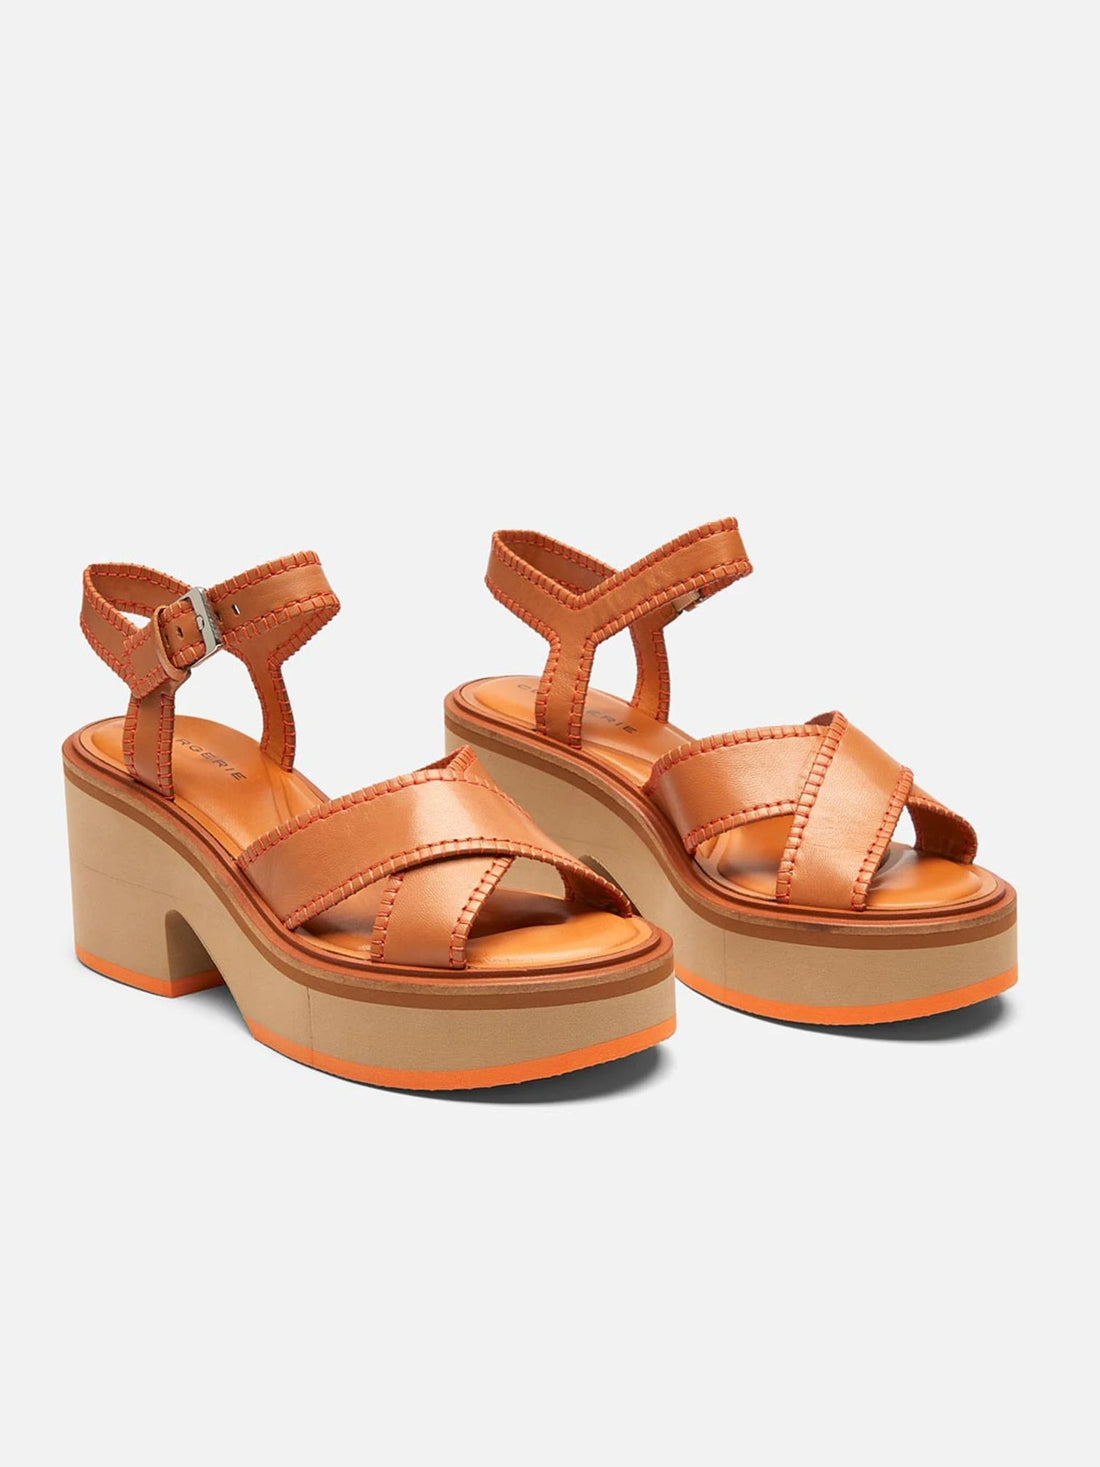 SANDALS - CHARLINE sandals, lambskin brown || OUTLET - 3606063549998 - Clergerie Paris - Europe